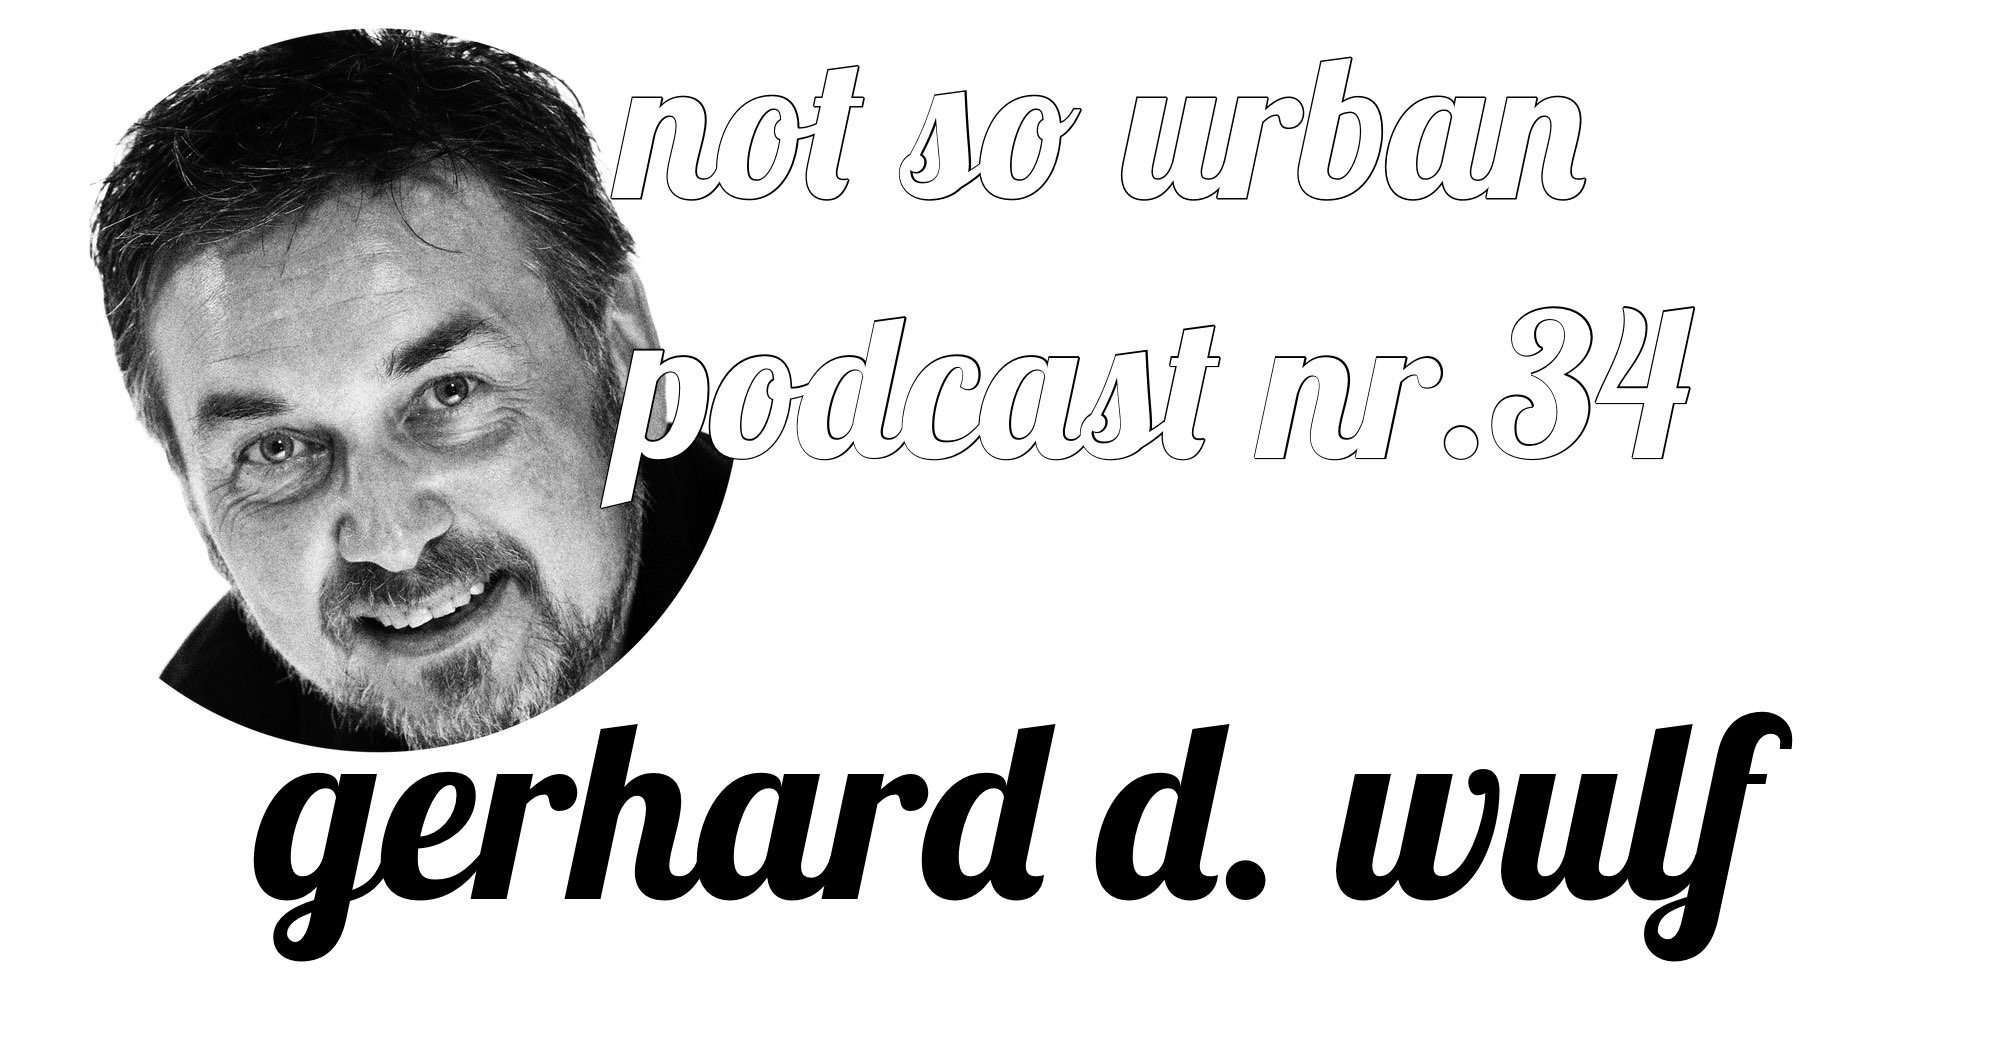 not so urban Podcast Nr. 34 Gerhard D. Wulf (Interviewer: Andreas Allgeyer)